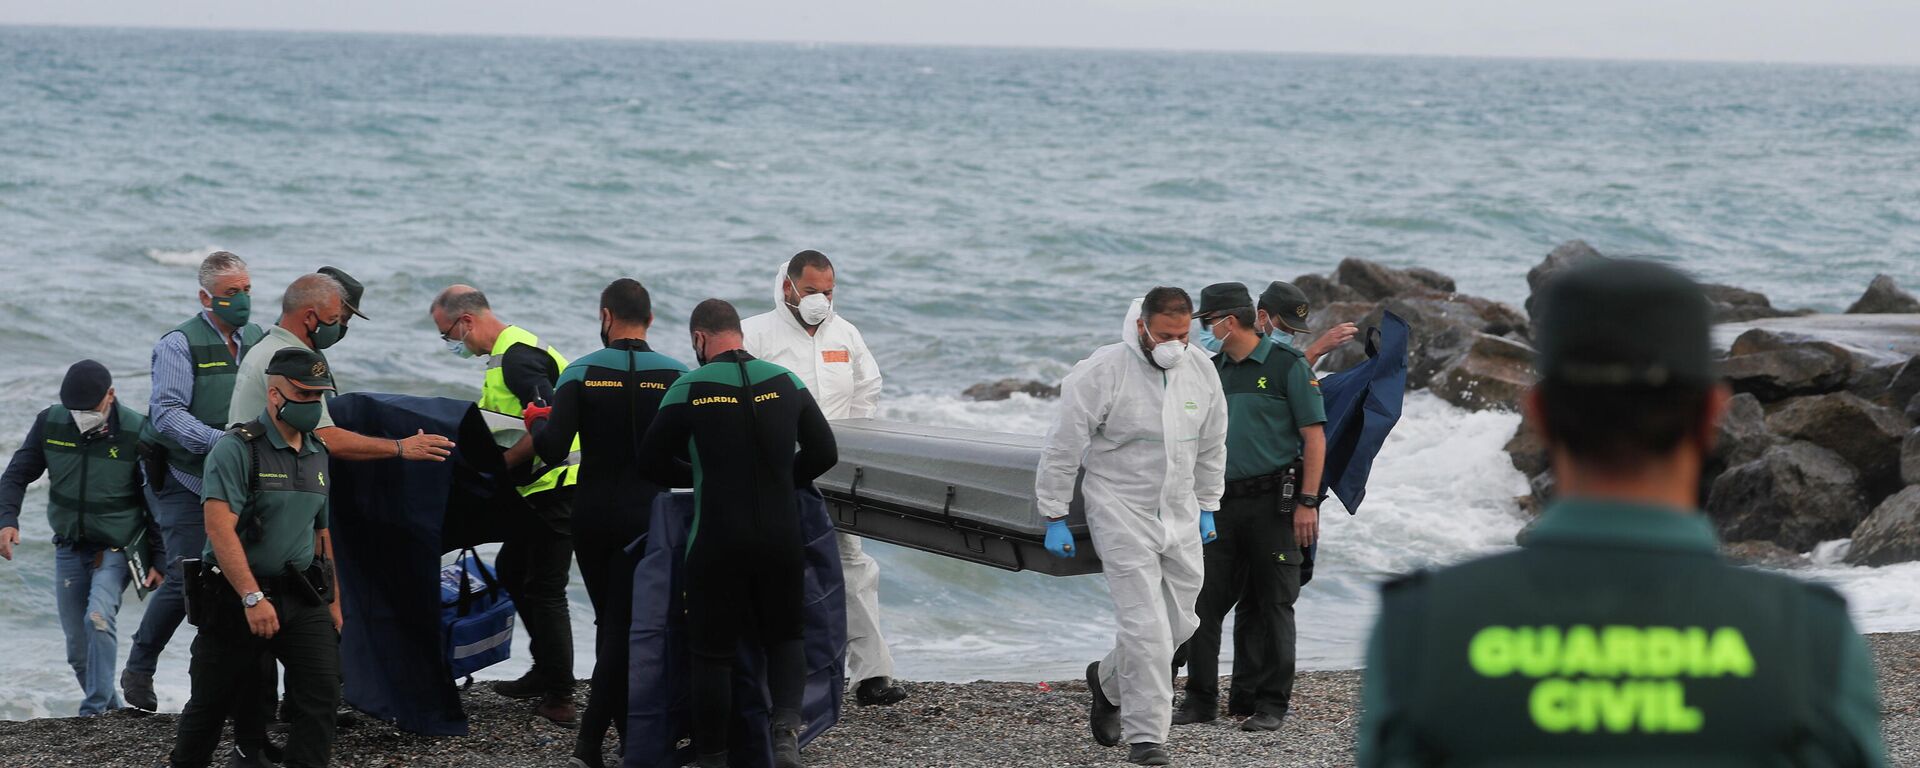 La Guardia Civil encuentra el cadáver de una persona en la playa del Tarajal, en Ceuta - Sputnik Mundo, 1920, 20.05.2021